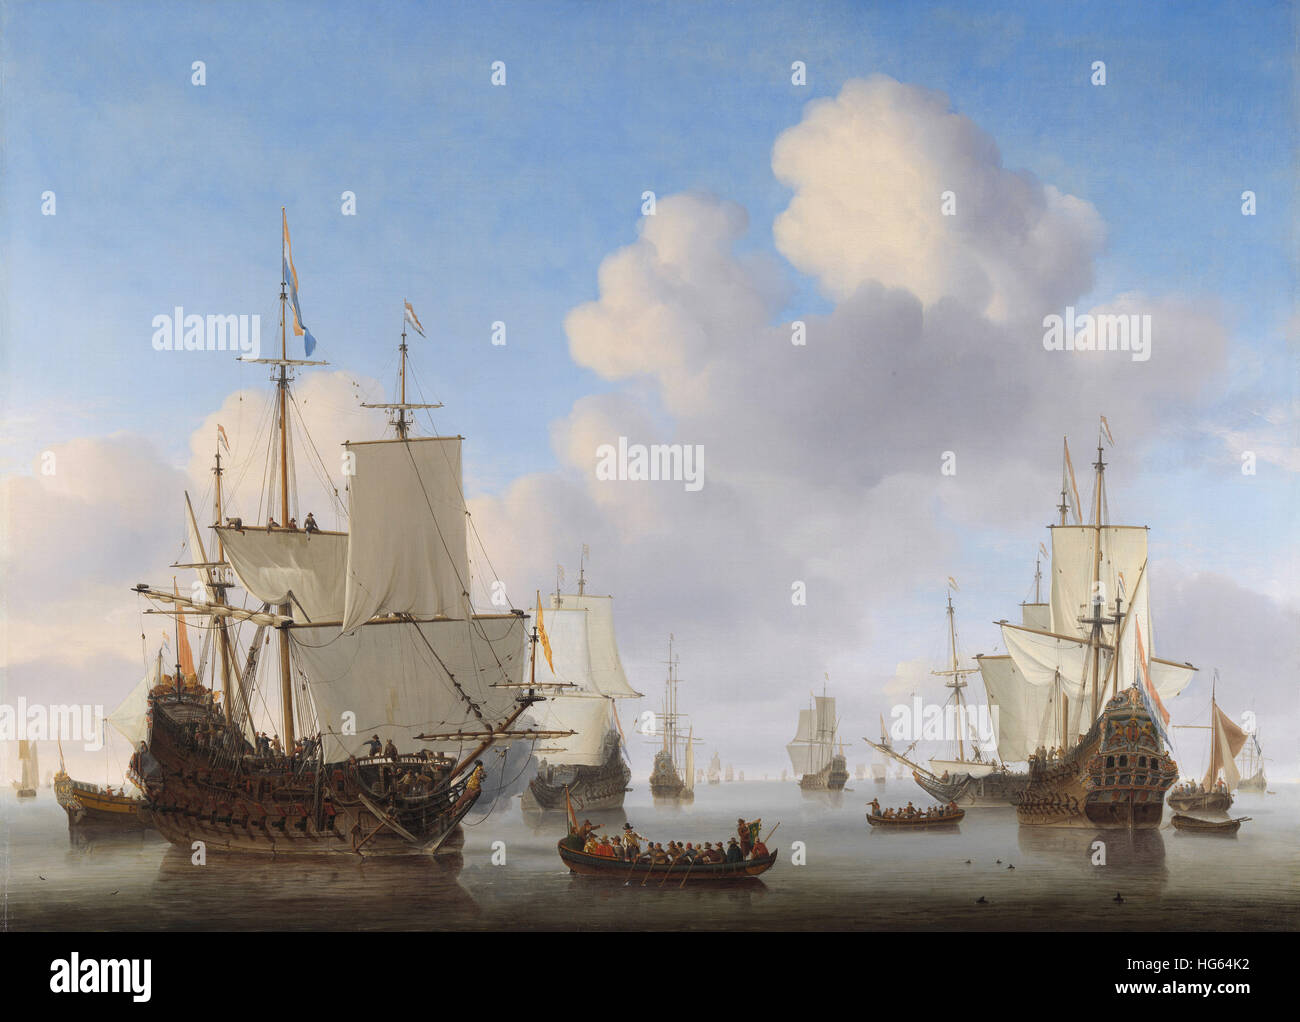 Dutch Ships in a Calm, by Willem van de Velde Stock Photo